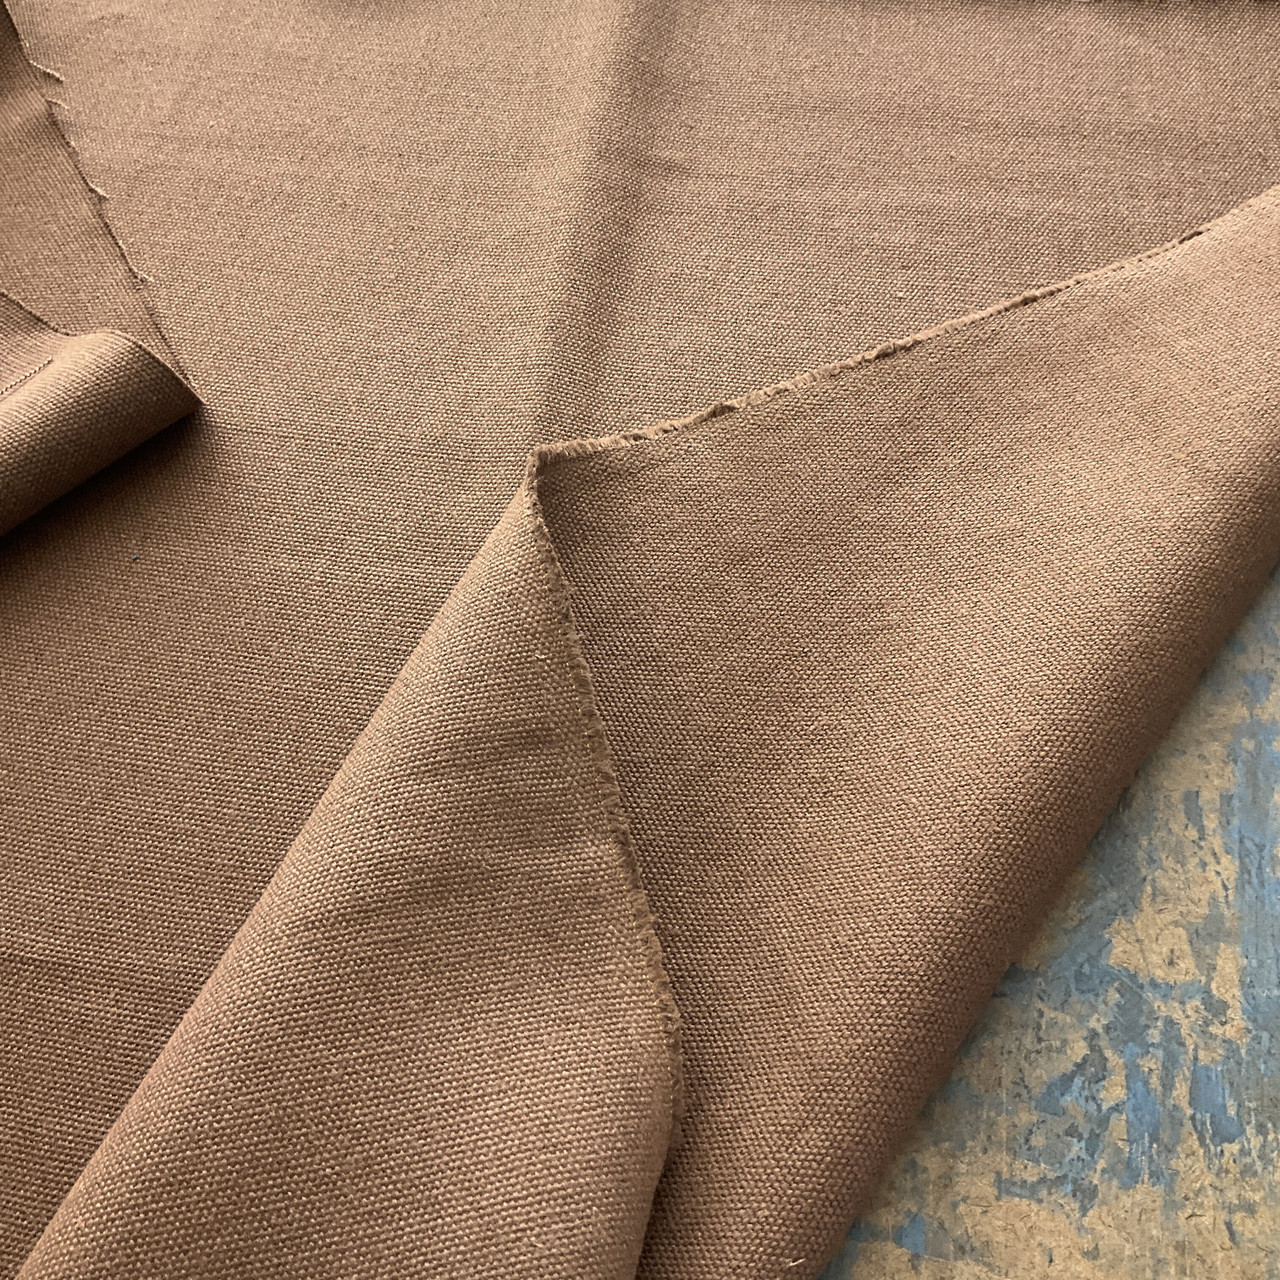 Home Essentials Chocolate Cotton Canvas Fabric (2 Yards Min.) - Cotton Canvas Fabric - Fabric